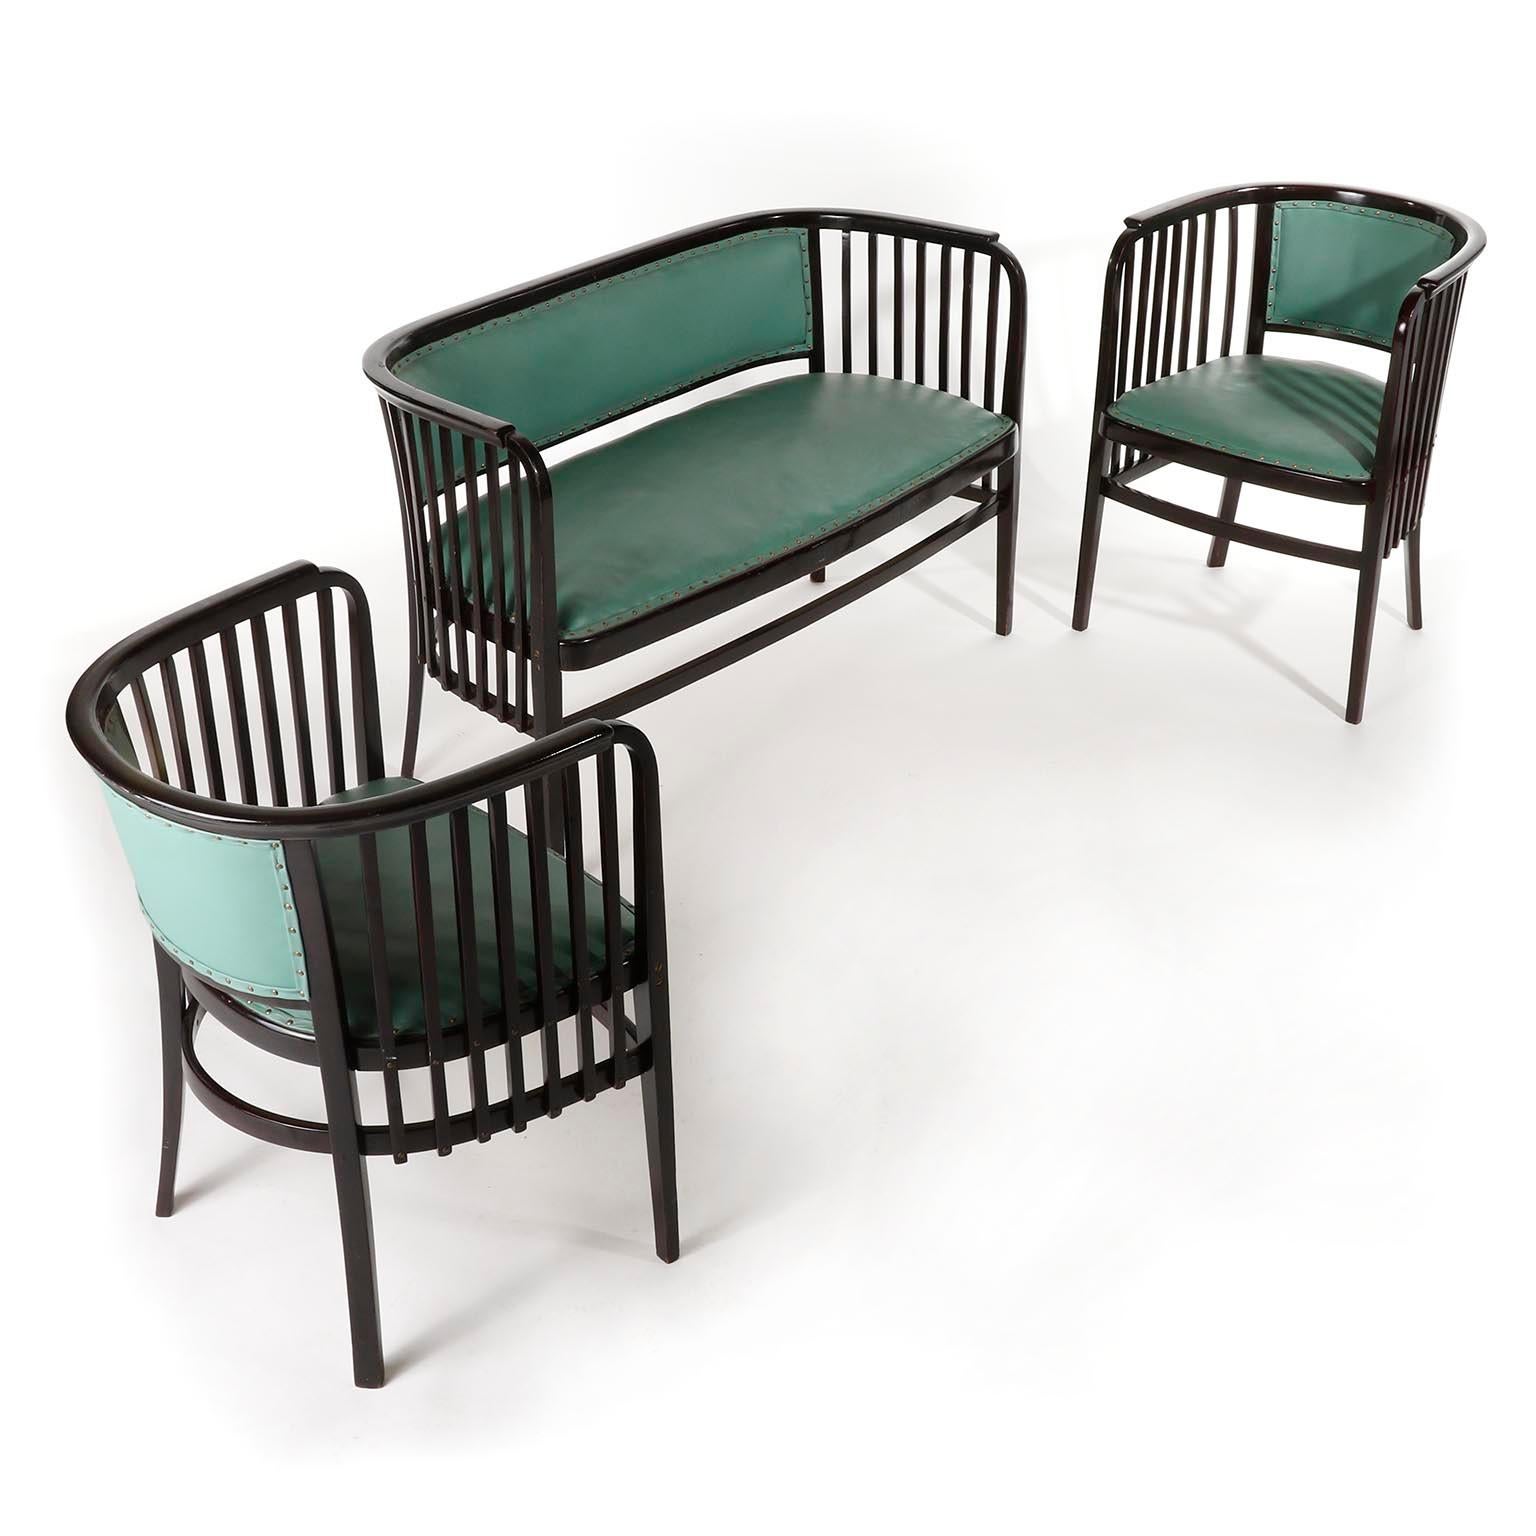 Art Nouveau Marcel Kammerer Seating Set Salon Suite, Thonet, Turquoise Green Leather, 1910 For Sale